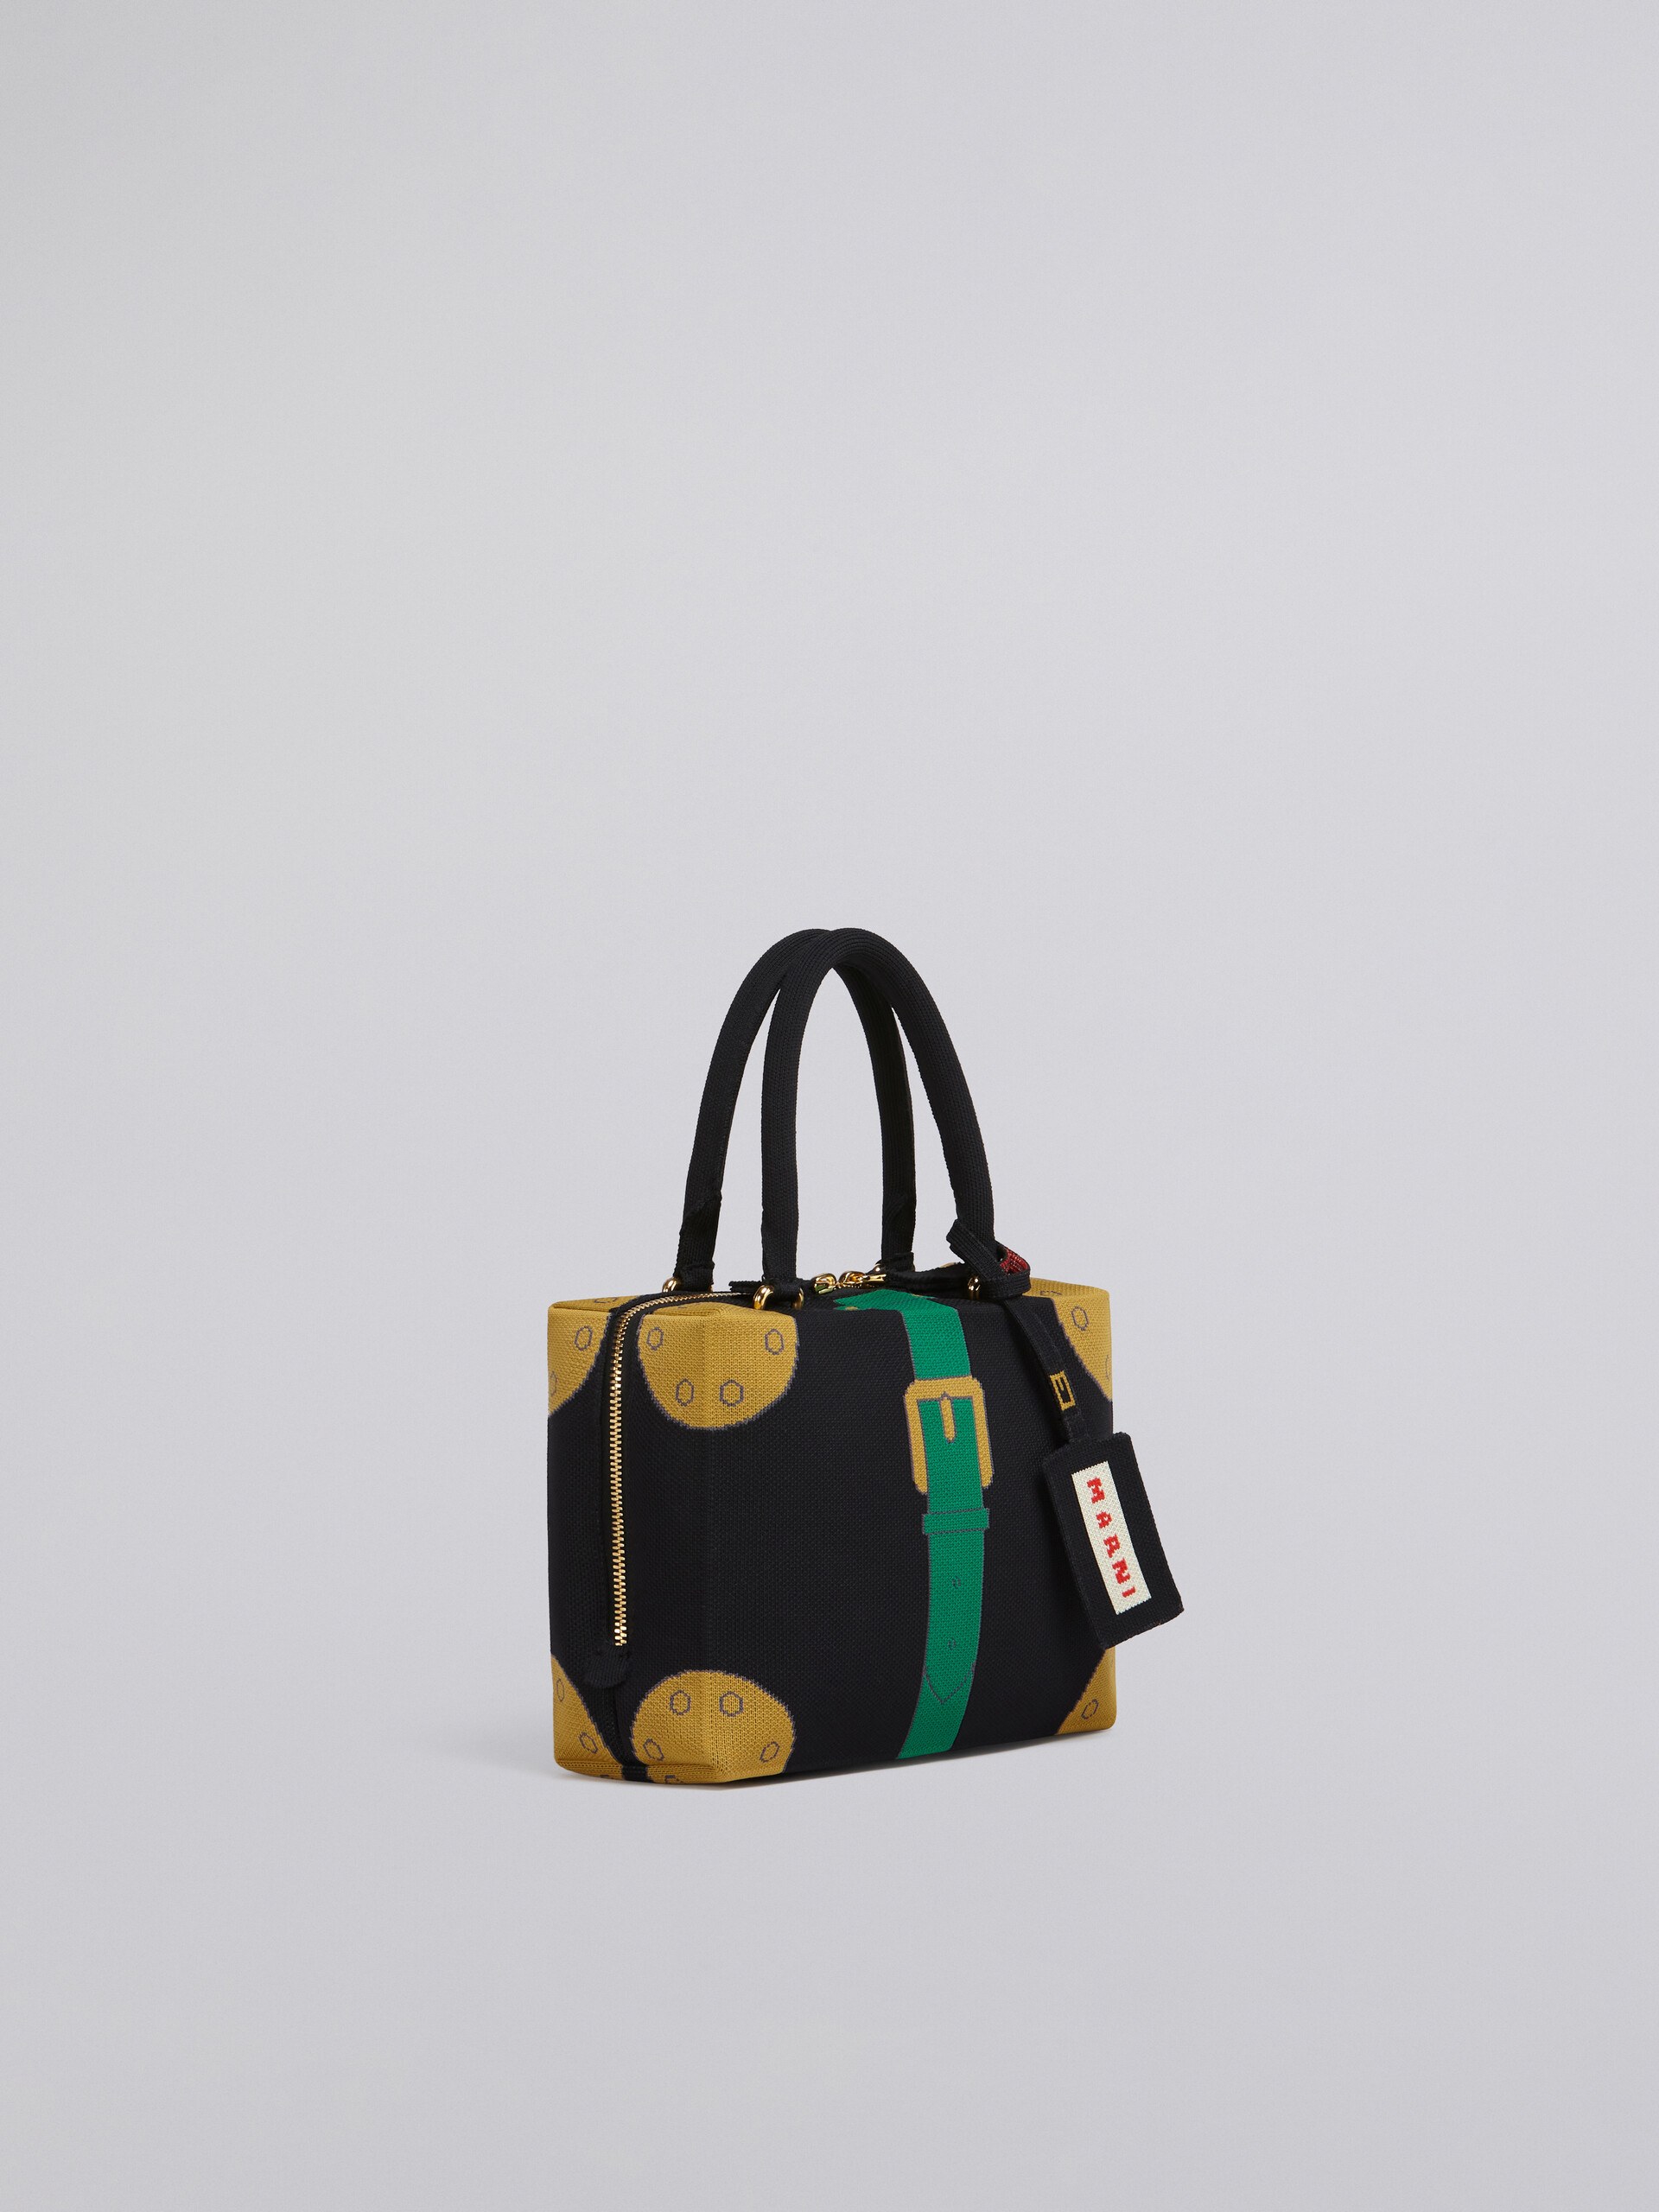 CUBIC bag in black trompe-l'œil jacquard - Handbag - Image 6